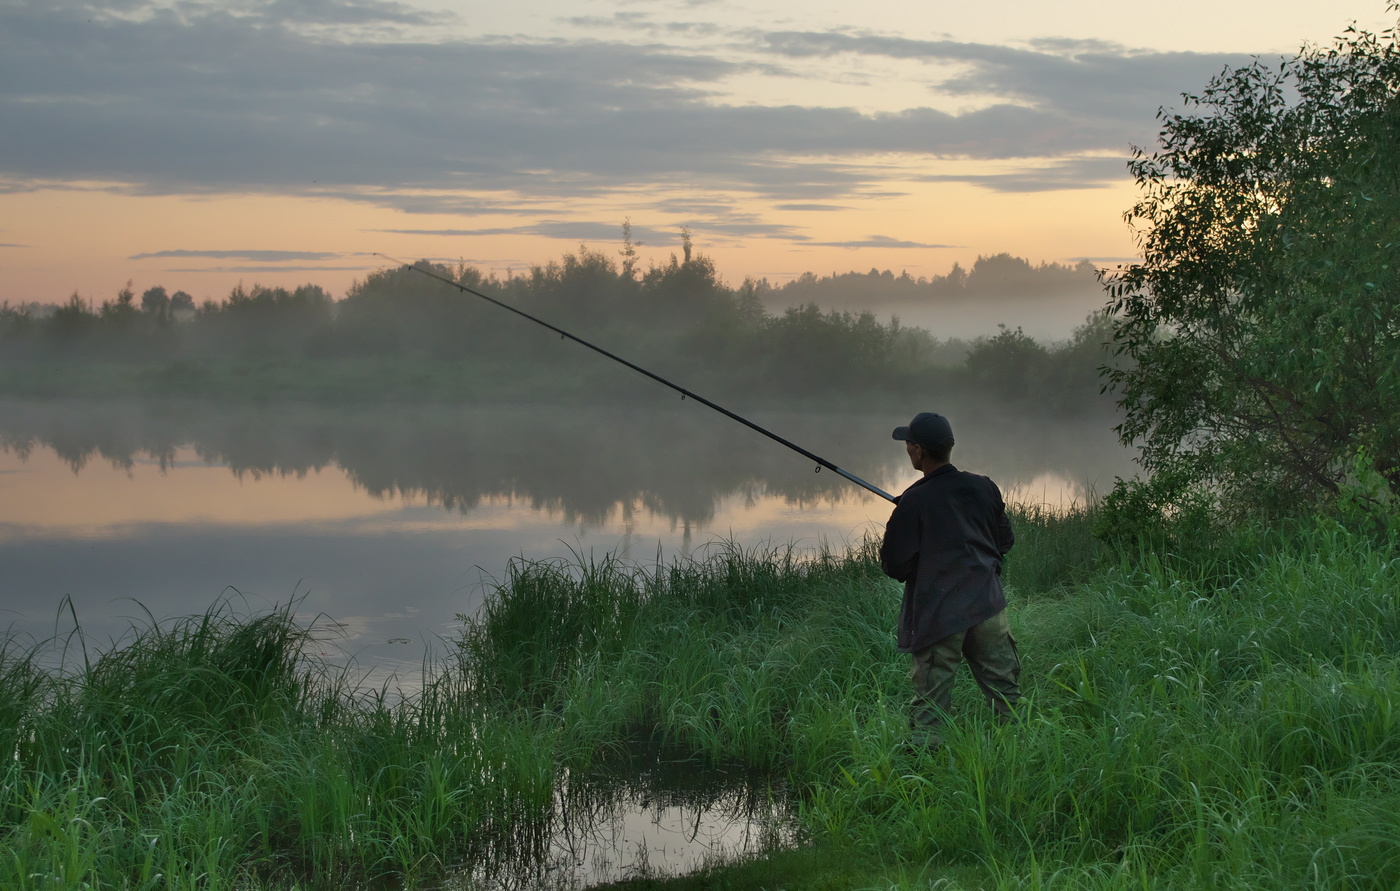 Рыбалка 1 озеро. Рыбалка пейзаж. Рыбак на озере. Пейзаж с рыбаком. Рыбак на речке.